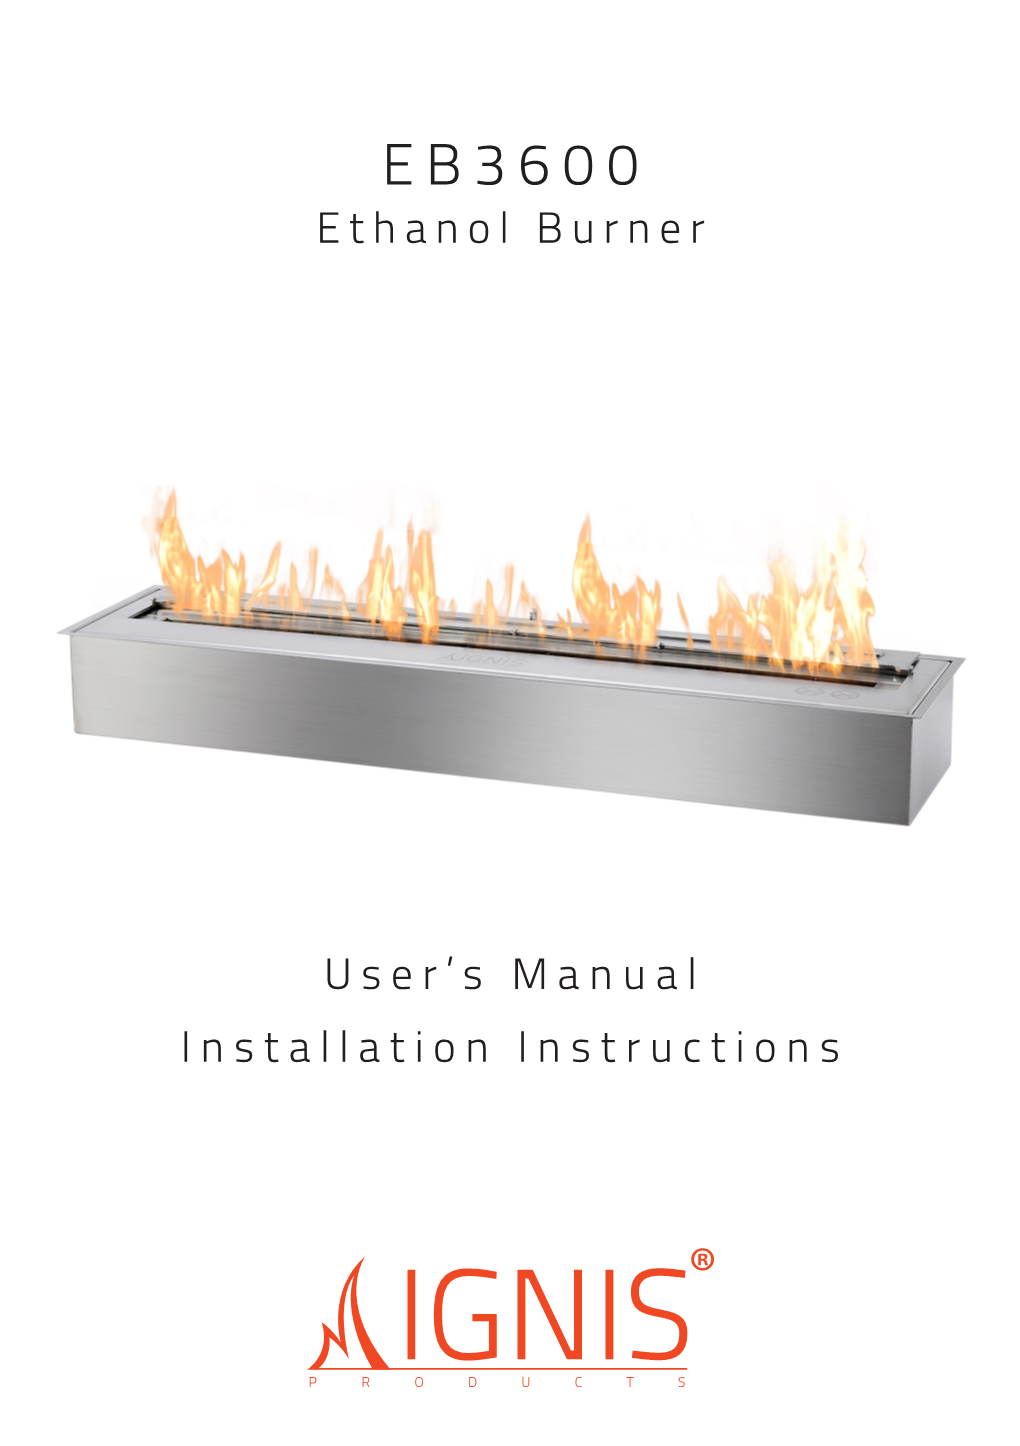 EB3600 Ethanol Burner